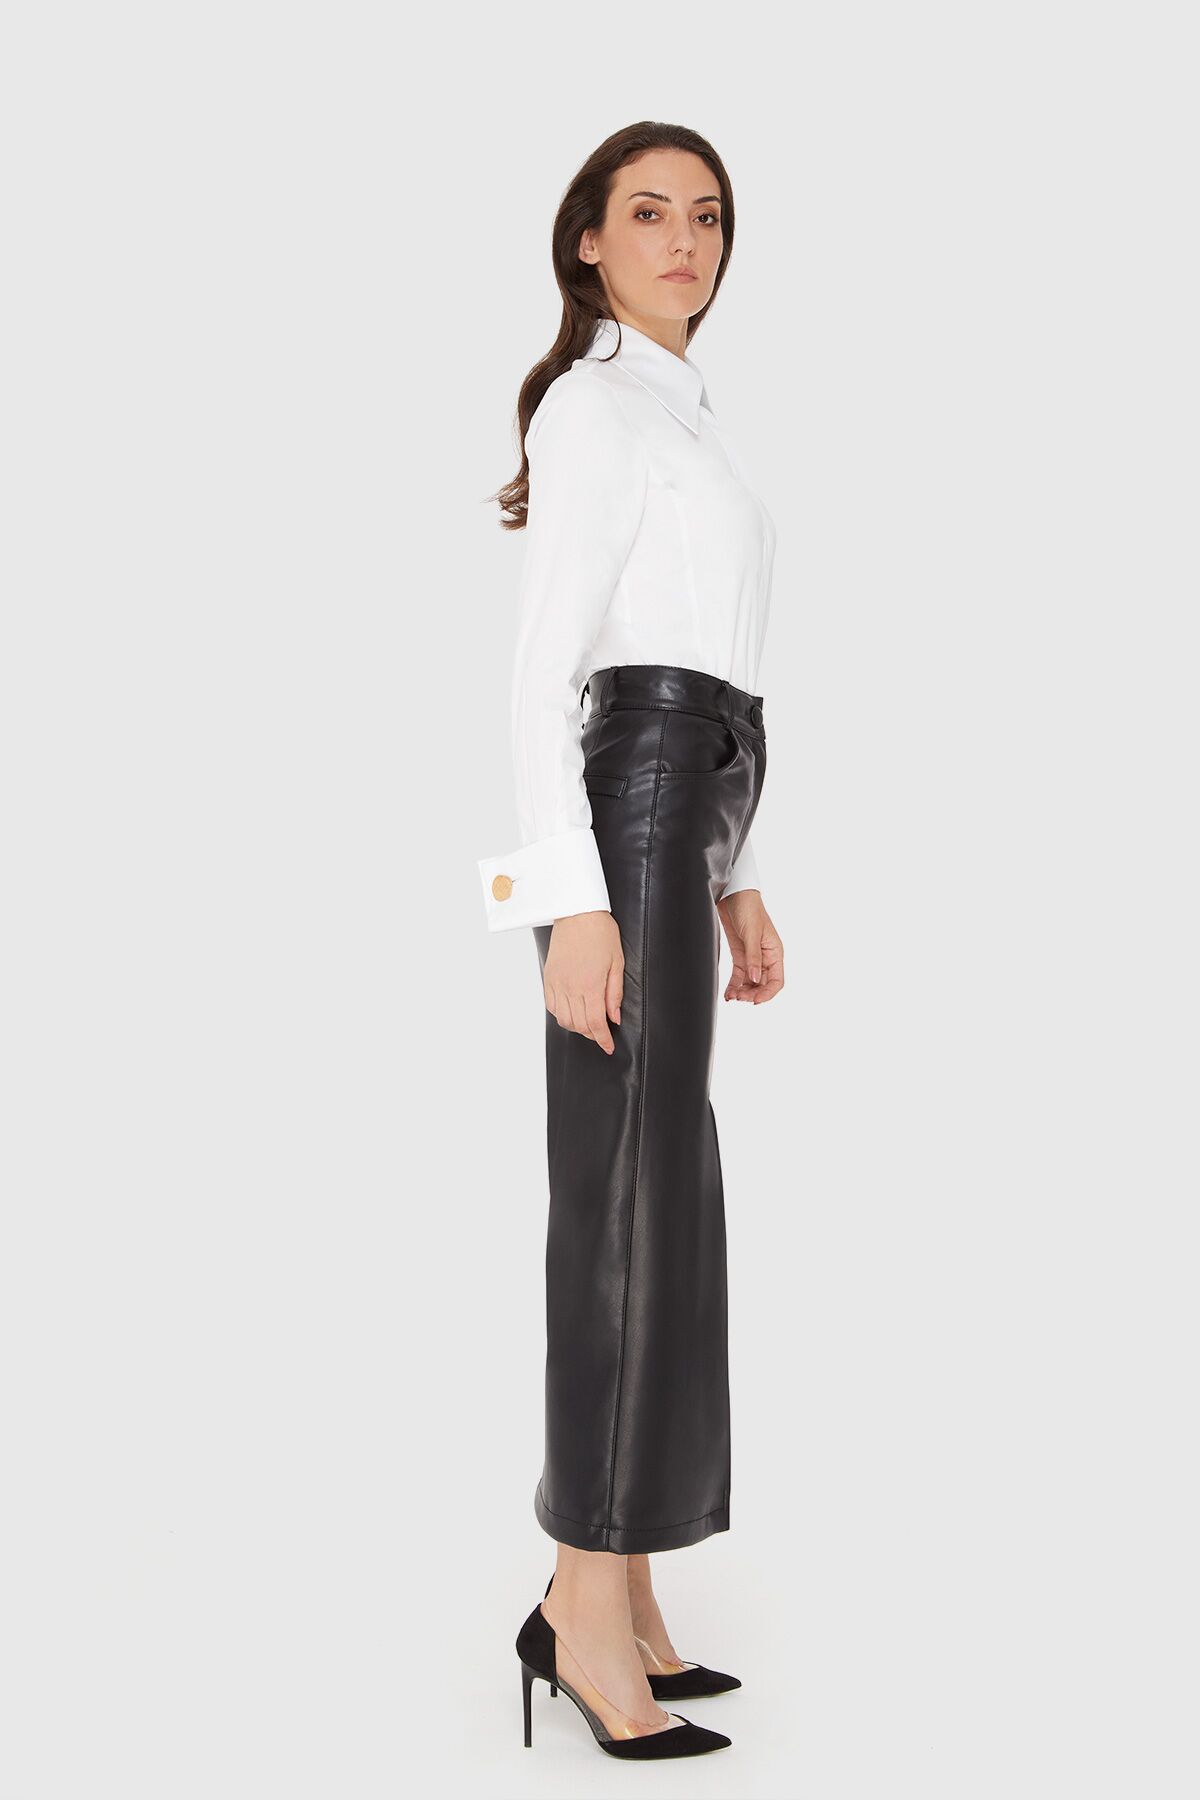 KIWE - Black Leather Midi Skirt With Slit Detail